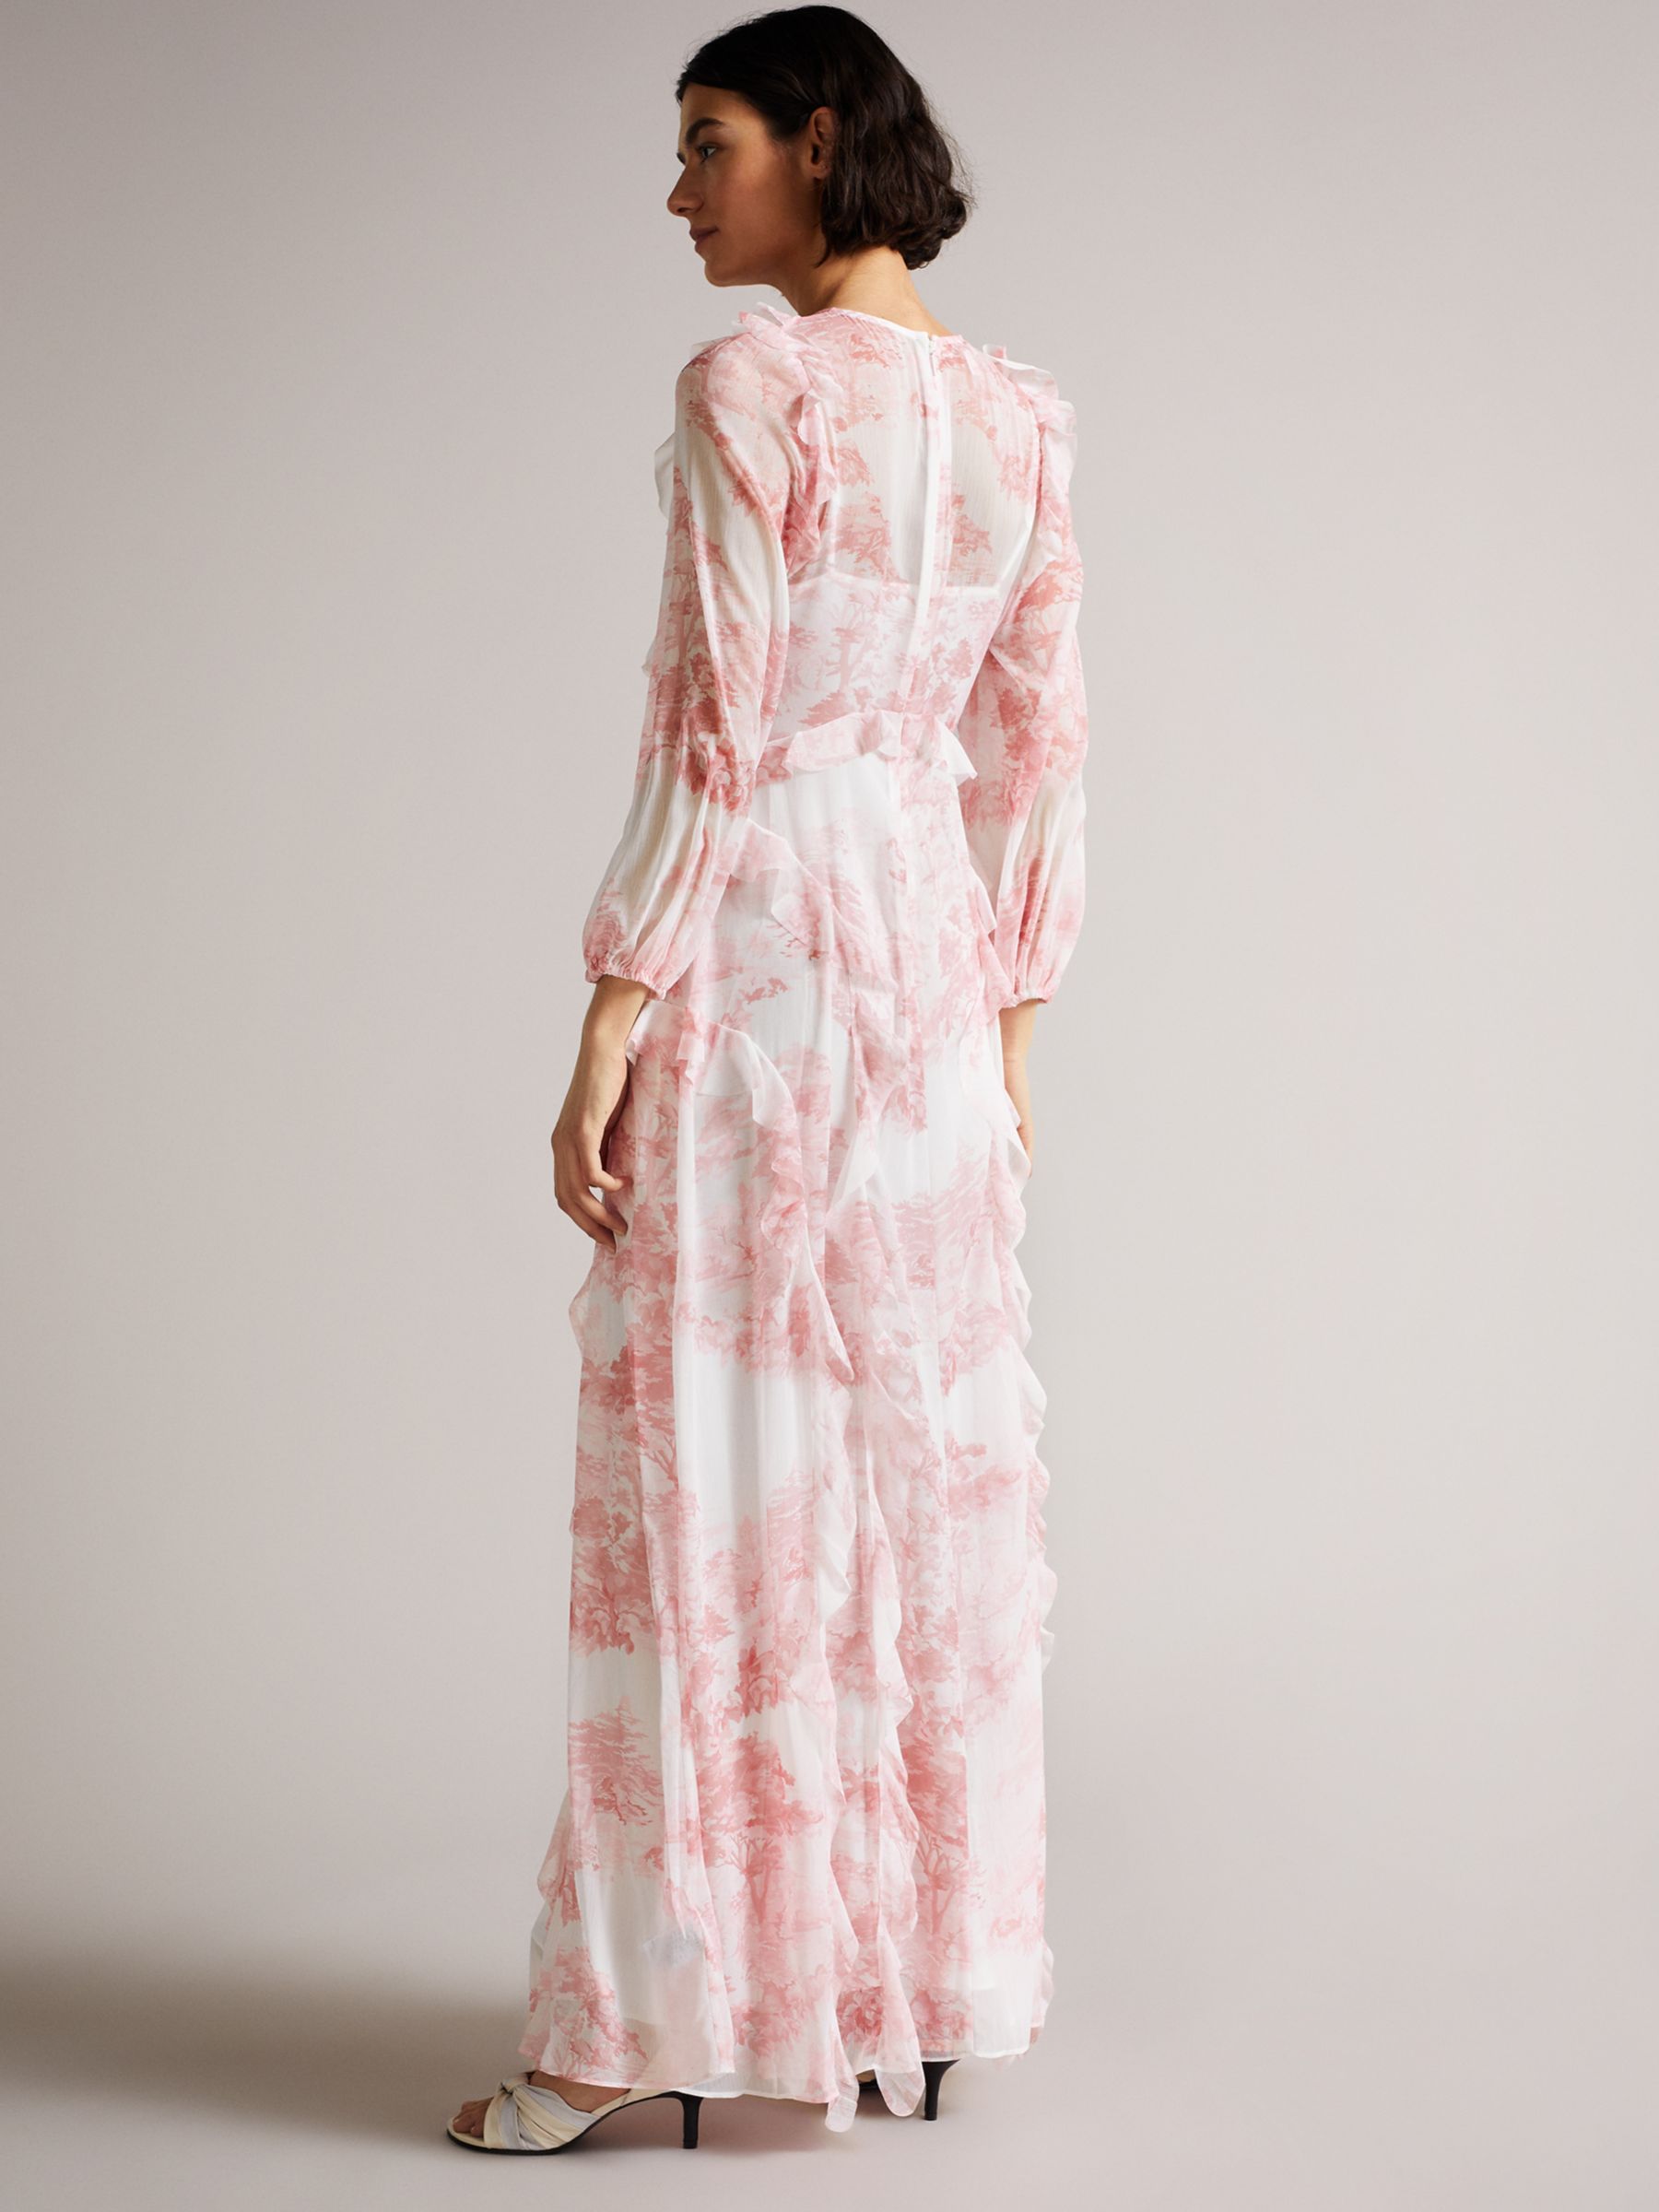 Ted Baker Kenddle Floral Maxi Dress, White/Pink